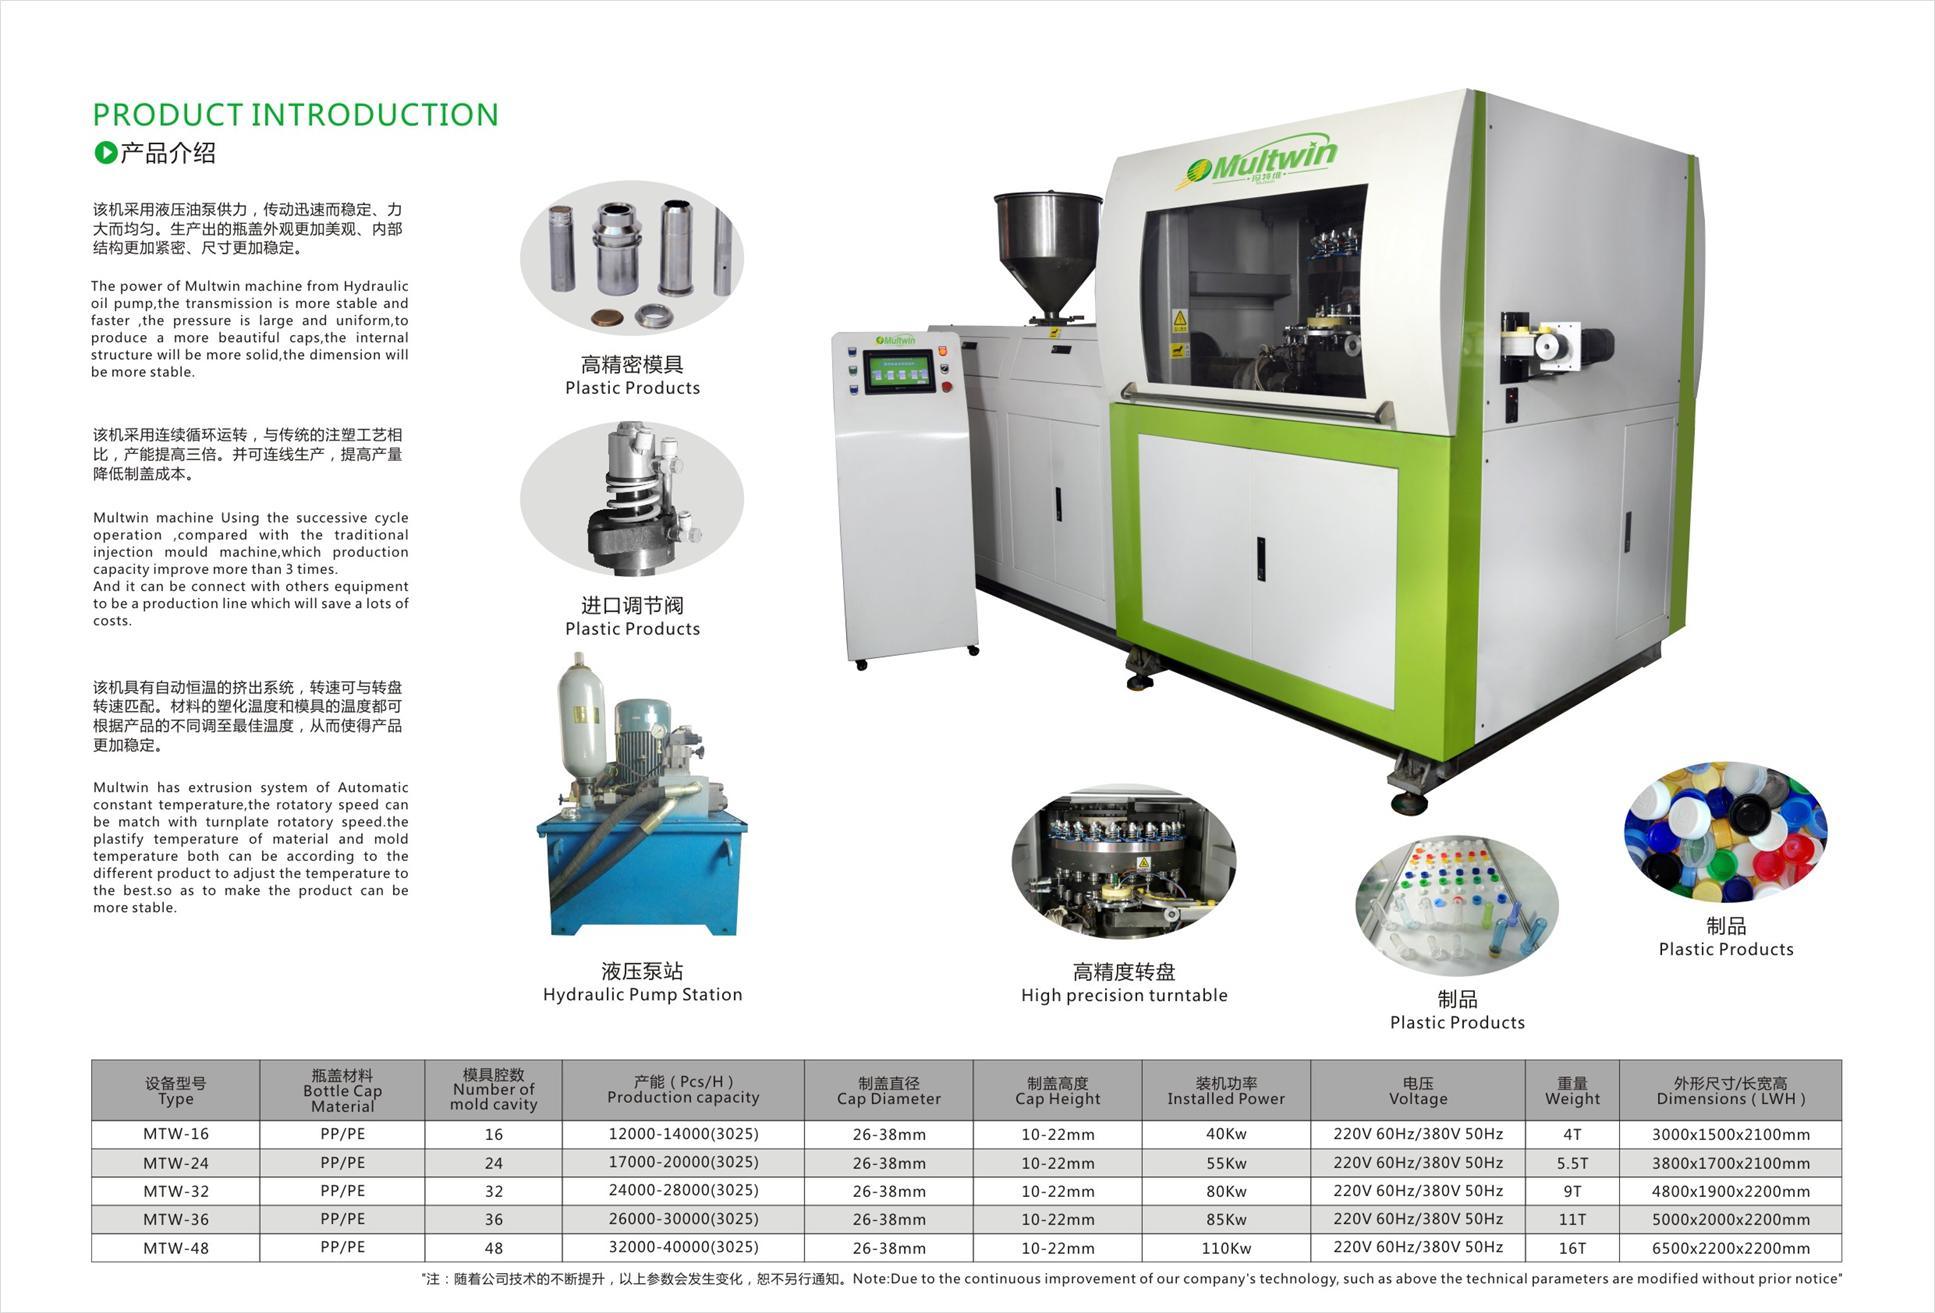 Shenzhen Jiarun Specialied Plastic Bottle Cap Machine Manufacturer